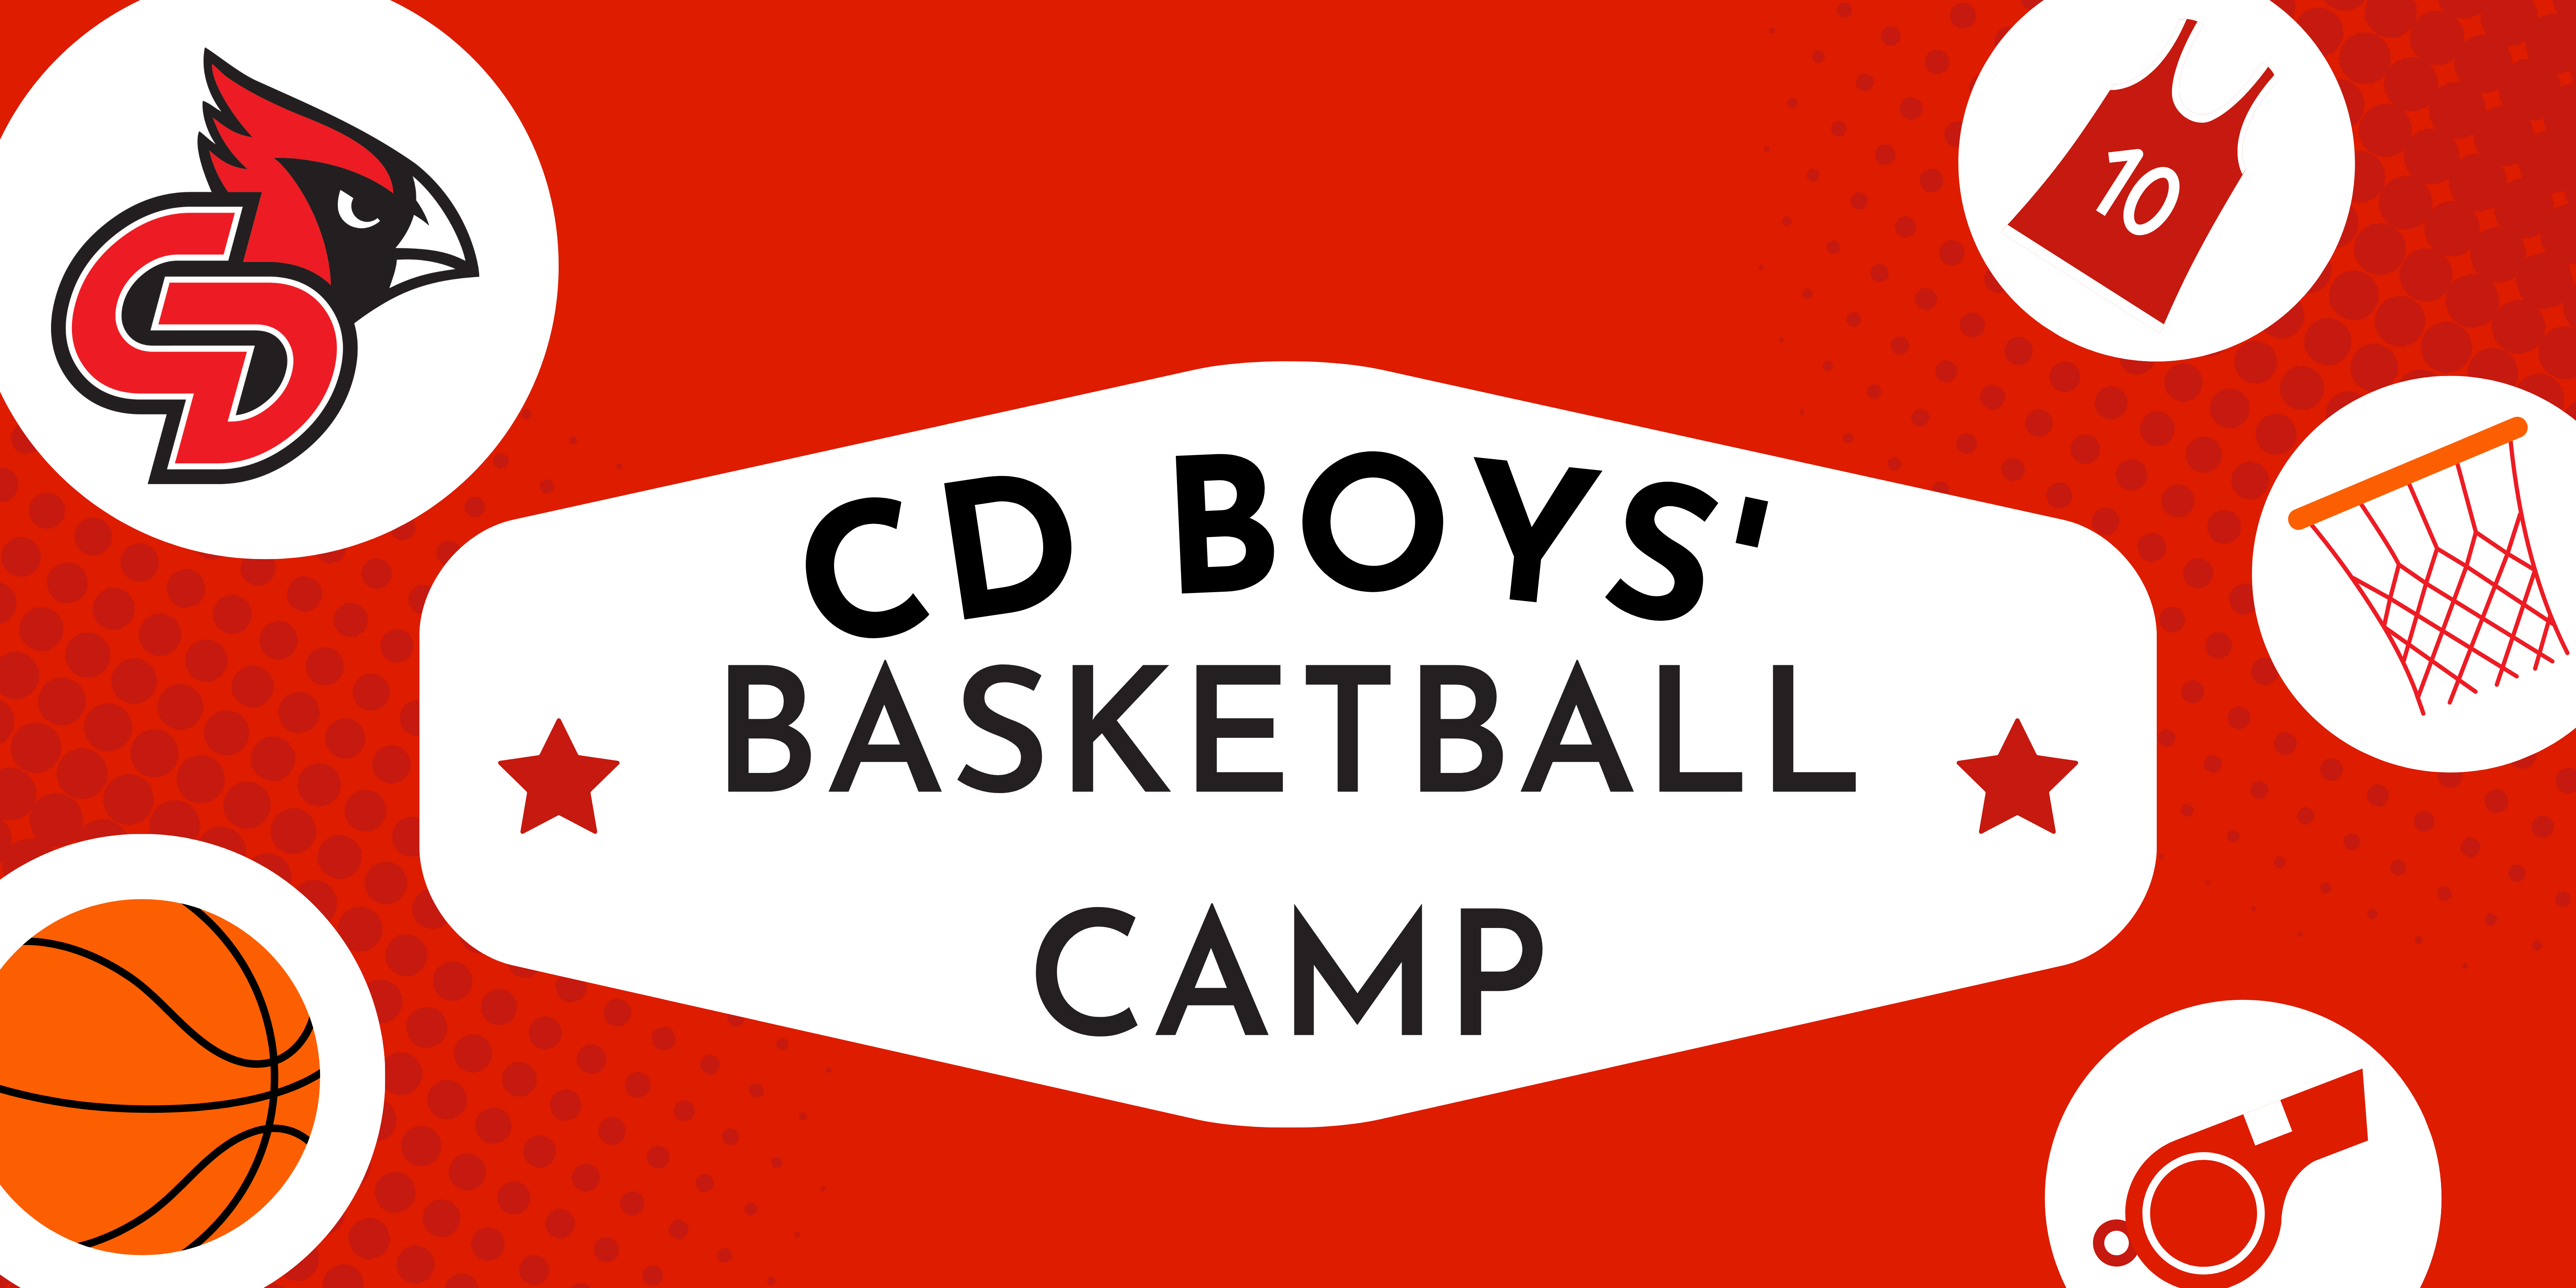 CD Boys' Basketball Camp (1)